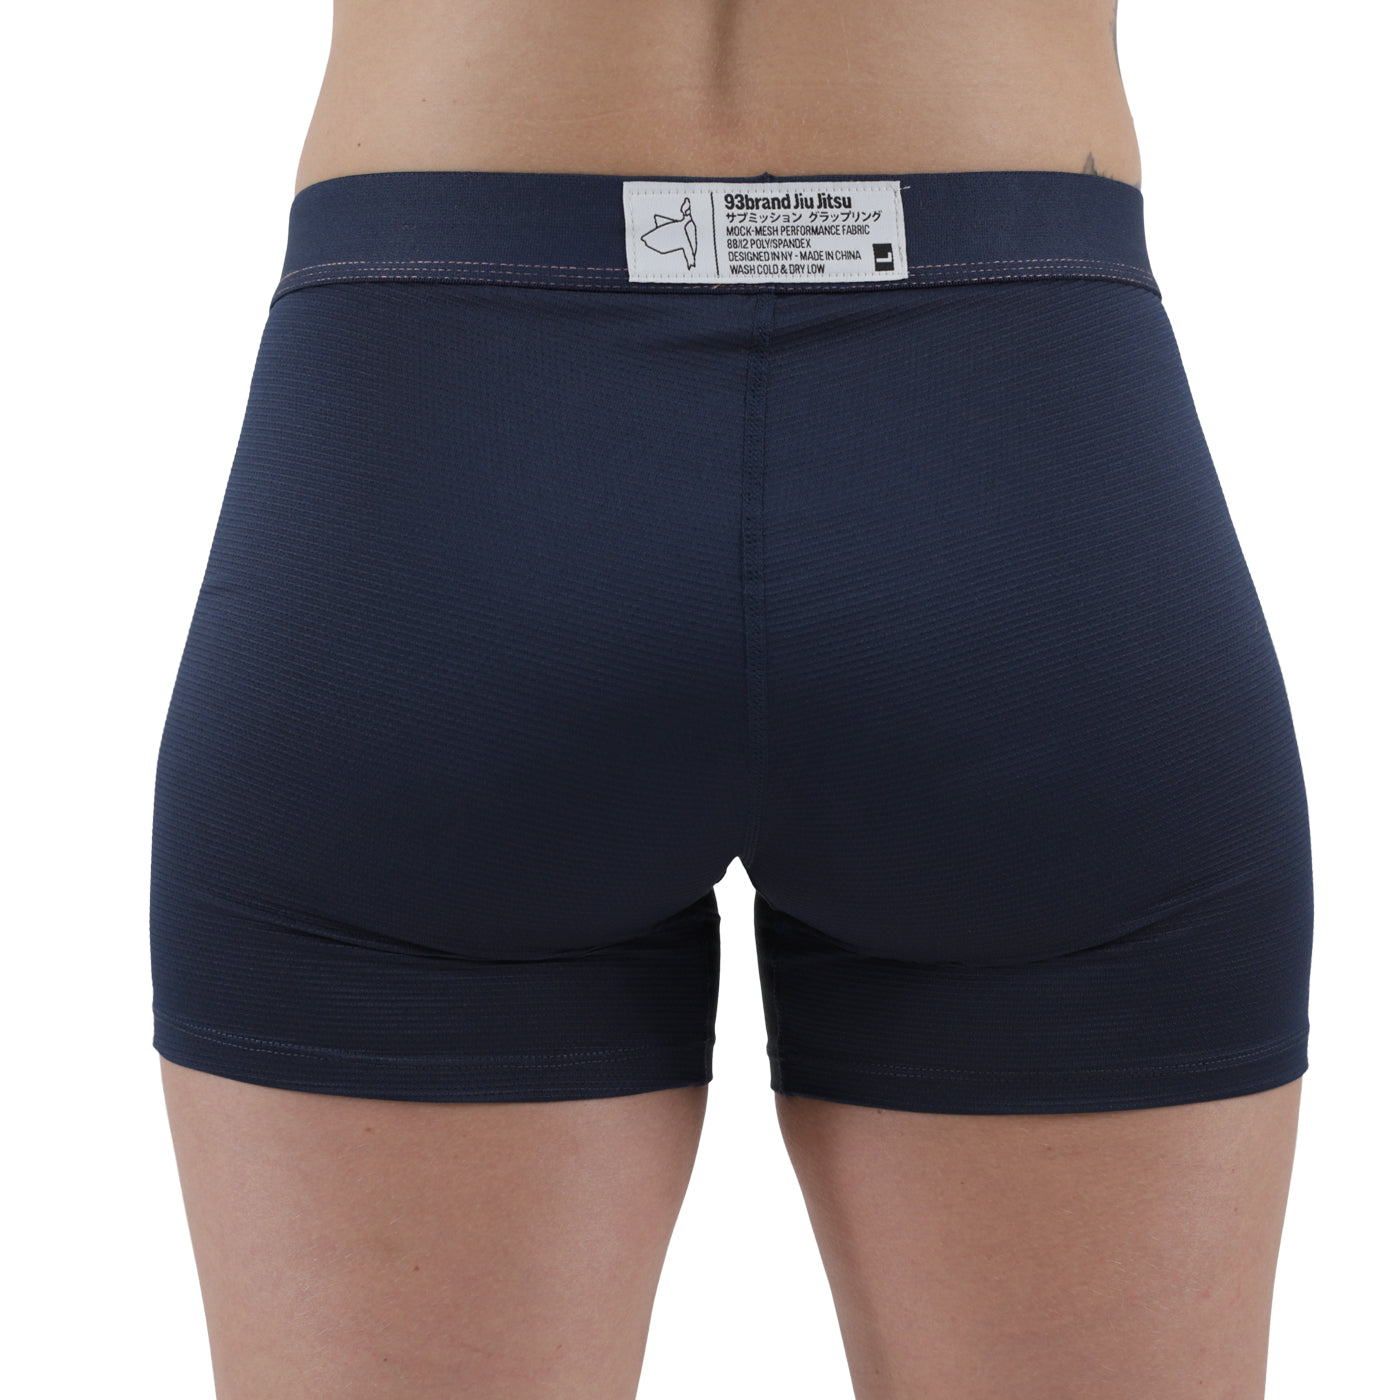 V5 Women's Grappling Underwear 2-PACK (2022 Pocket Edition) – 93brand